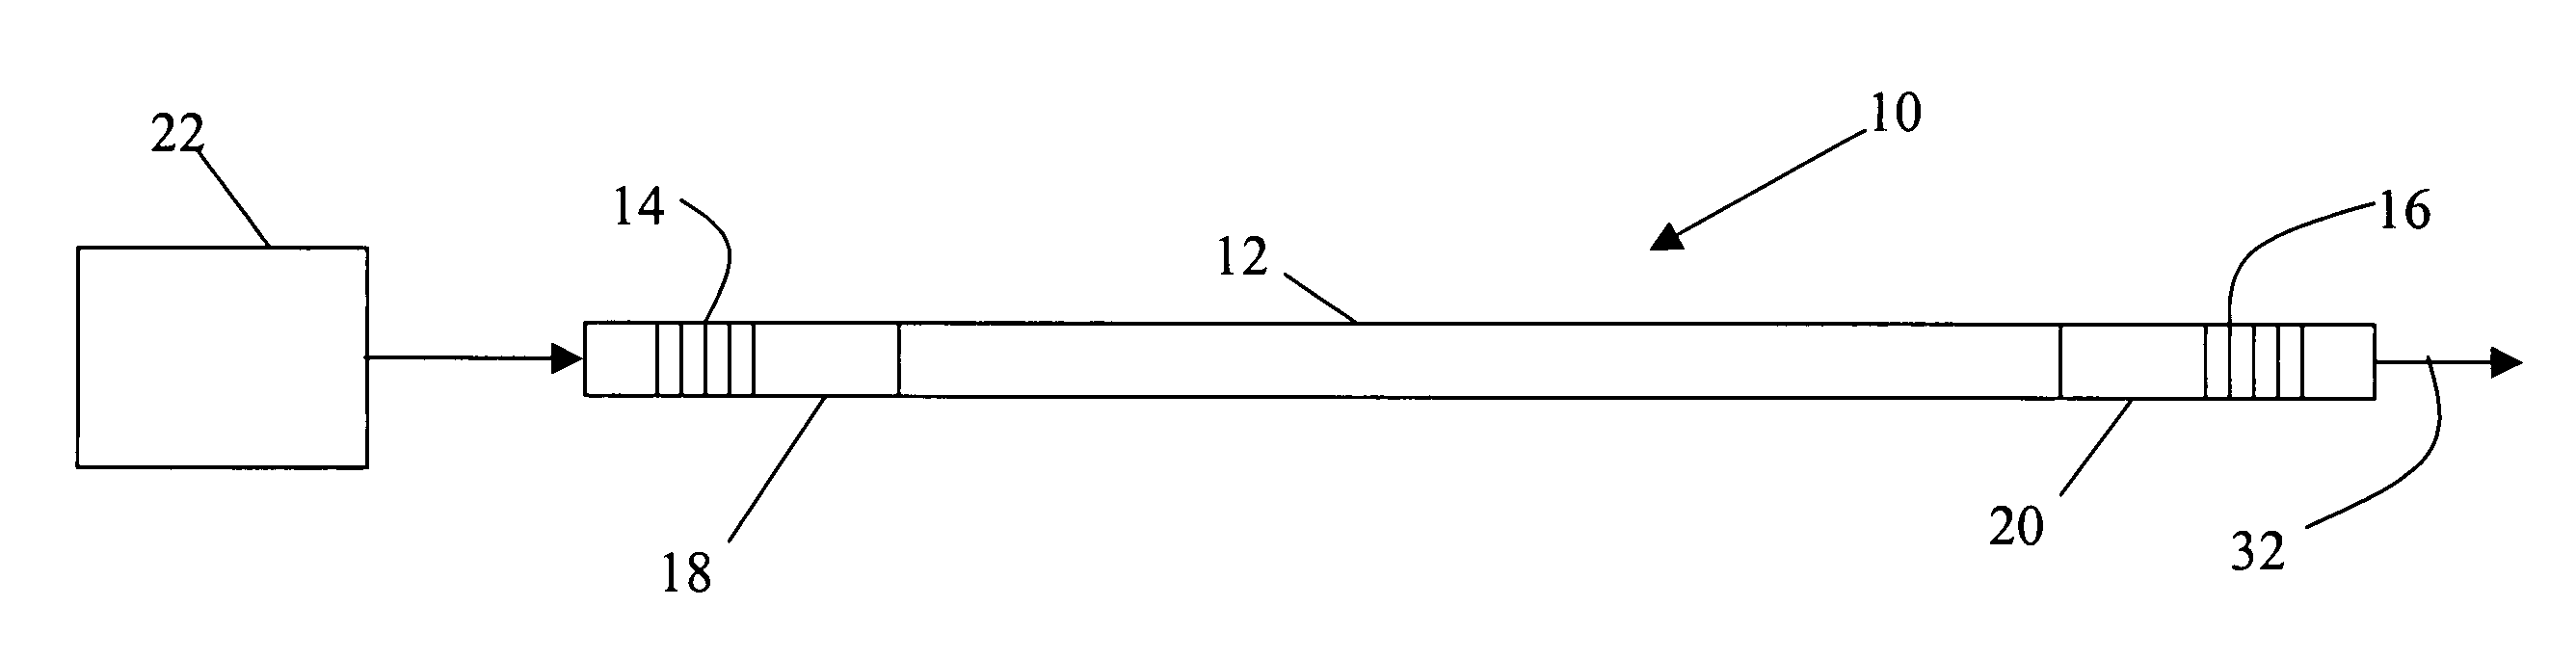 Single-frequency narrow linewidth 2 μm fiber laser